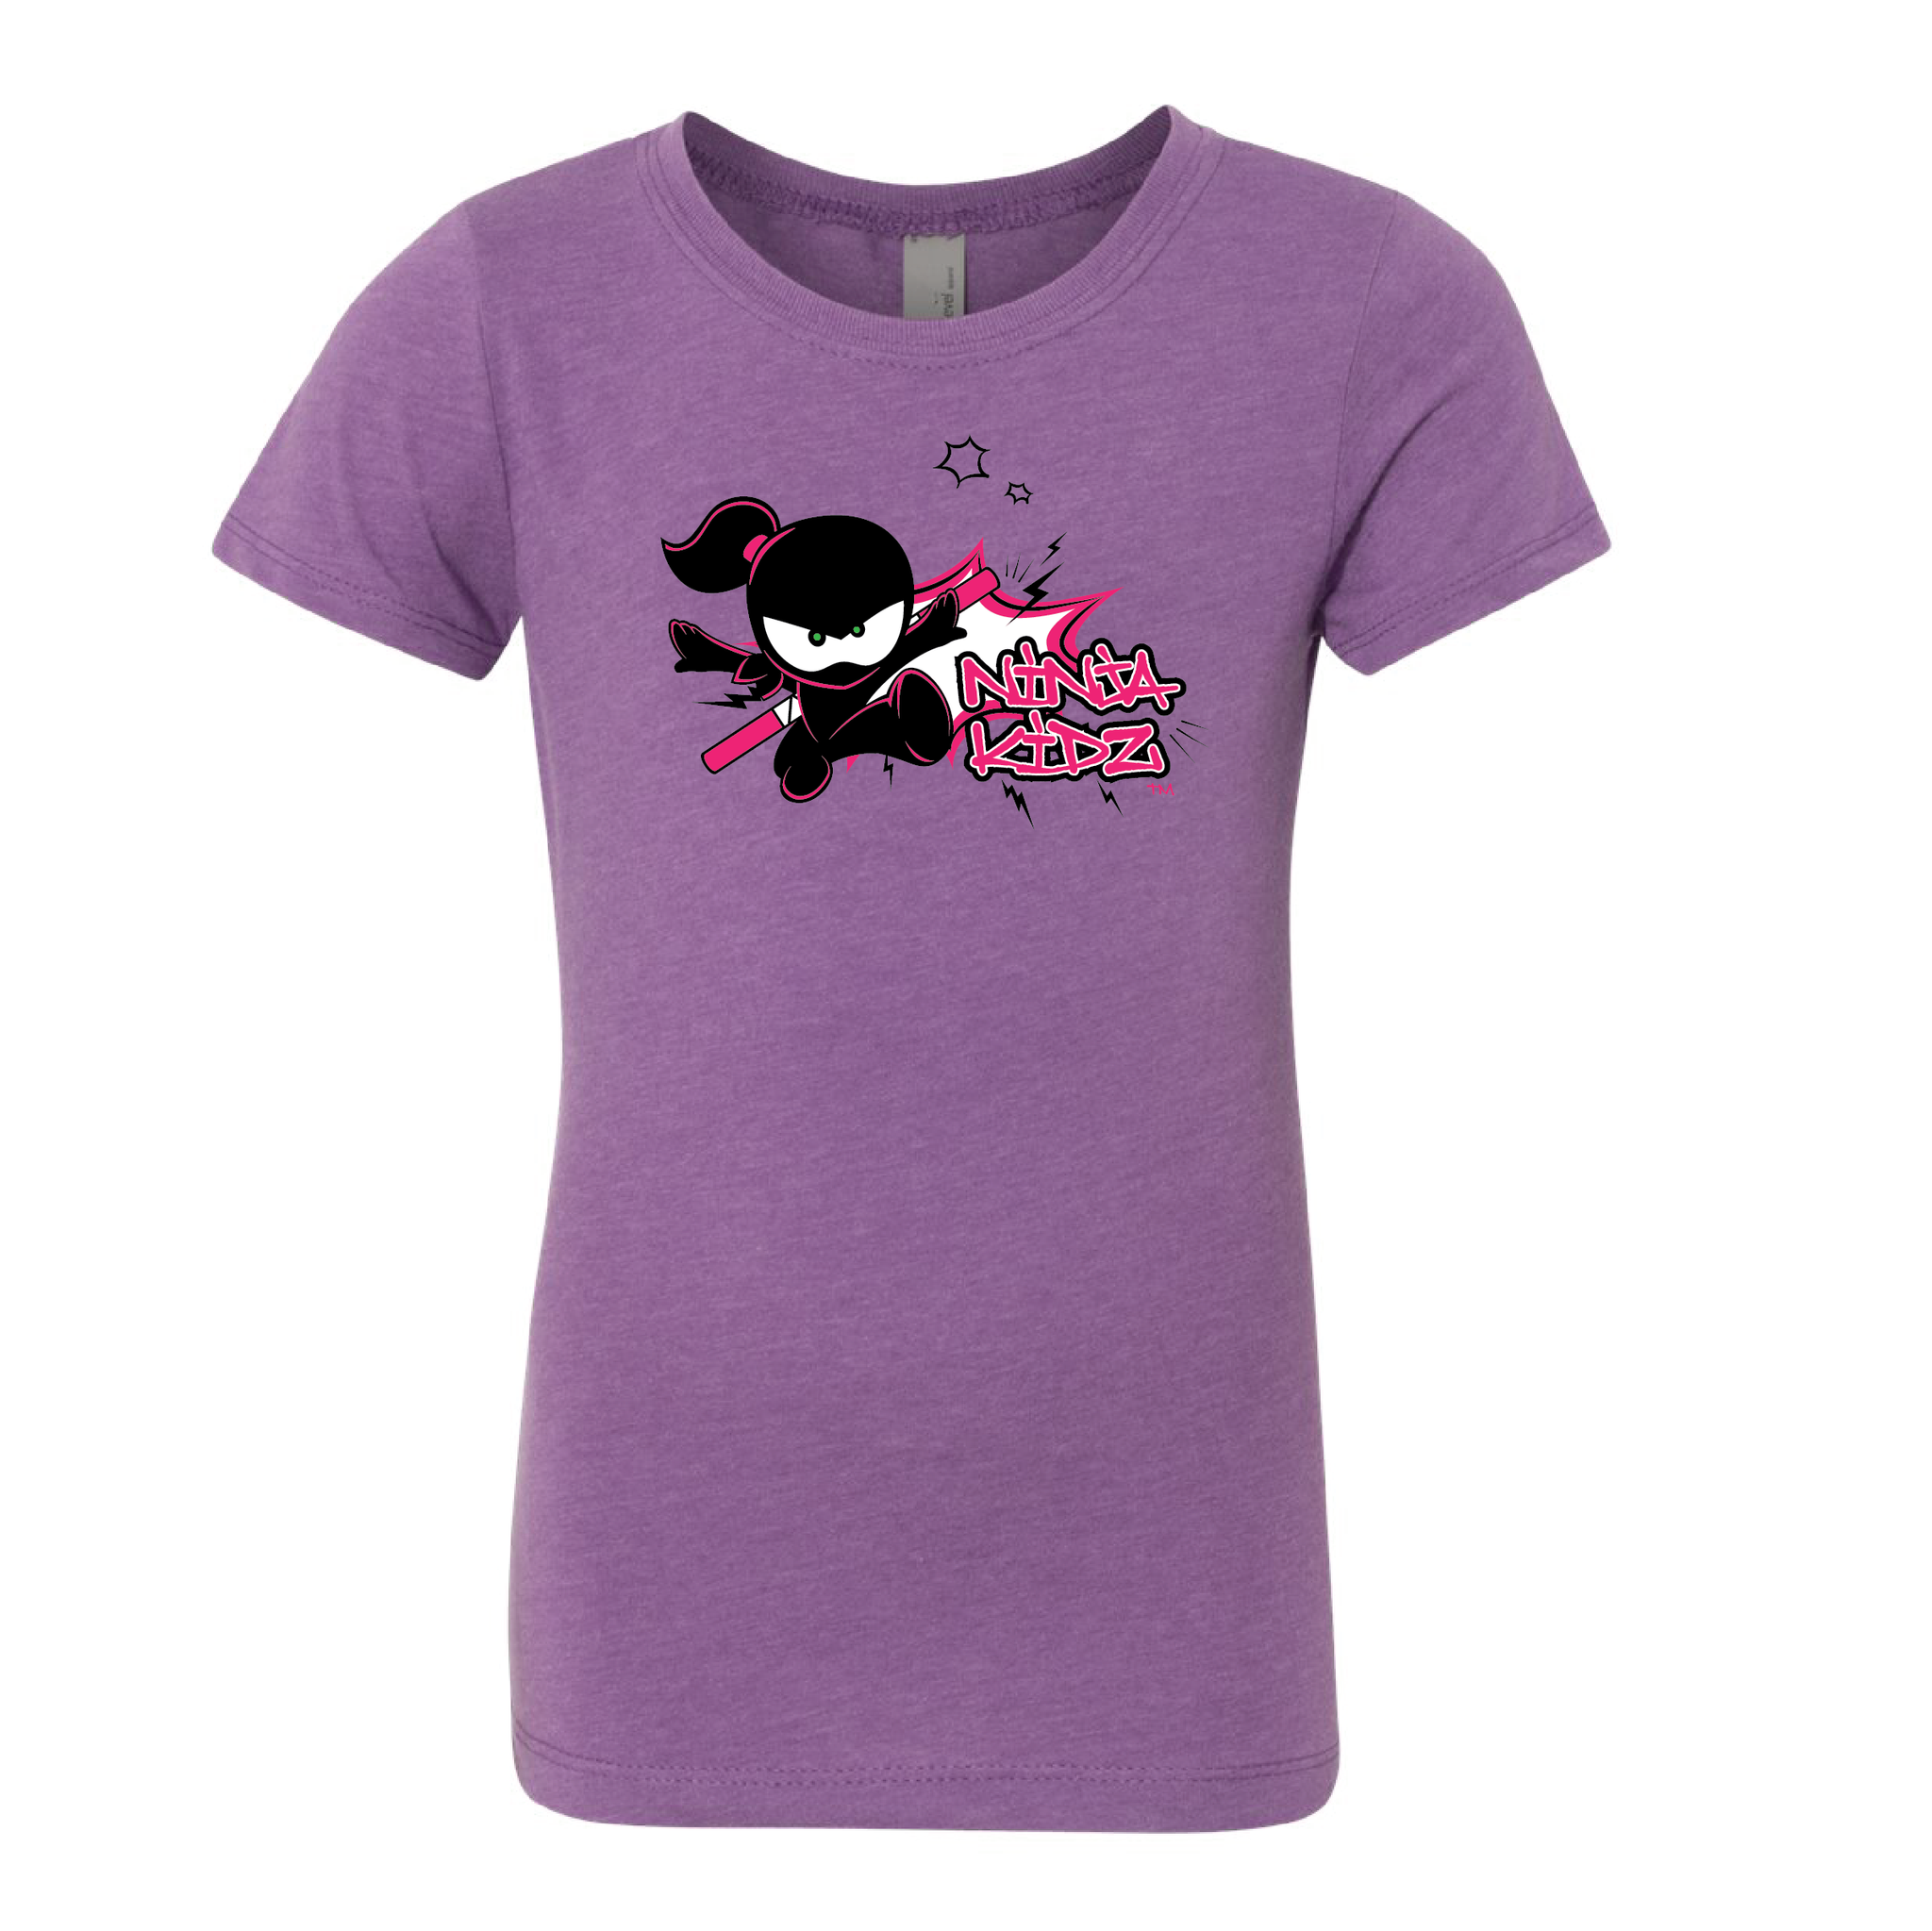 Ninja Kidz Spark Girl T Shirt 3.0 ©